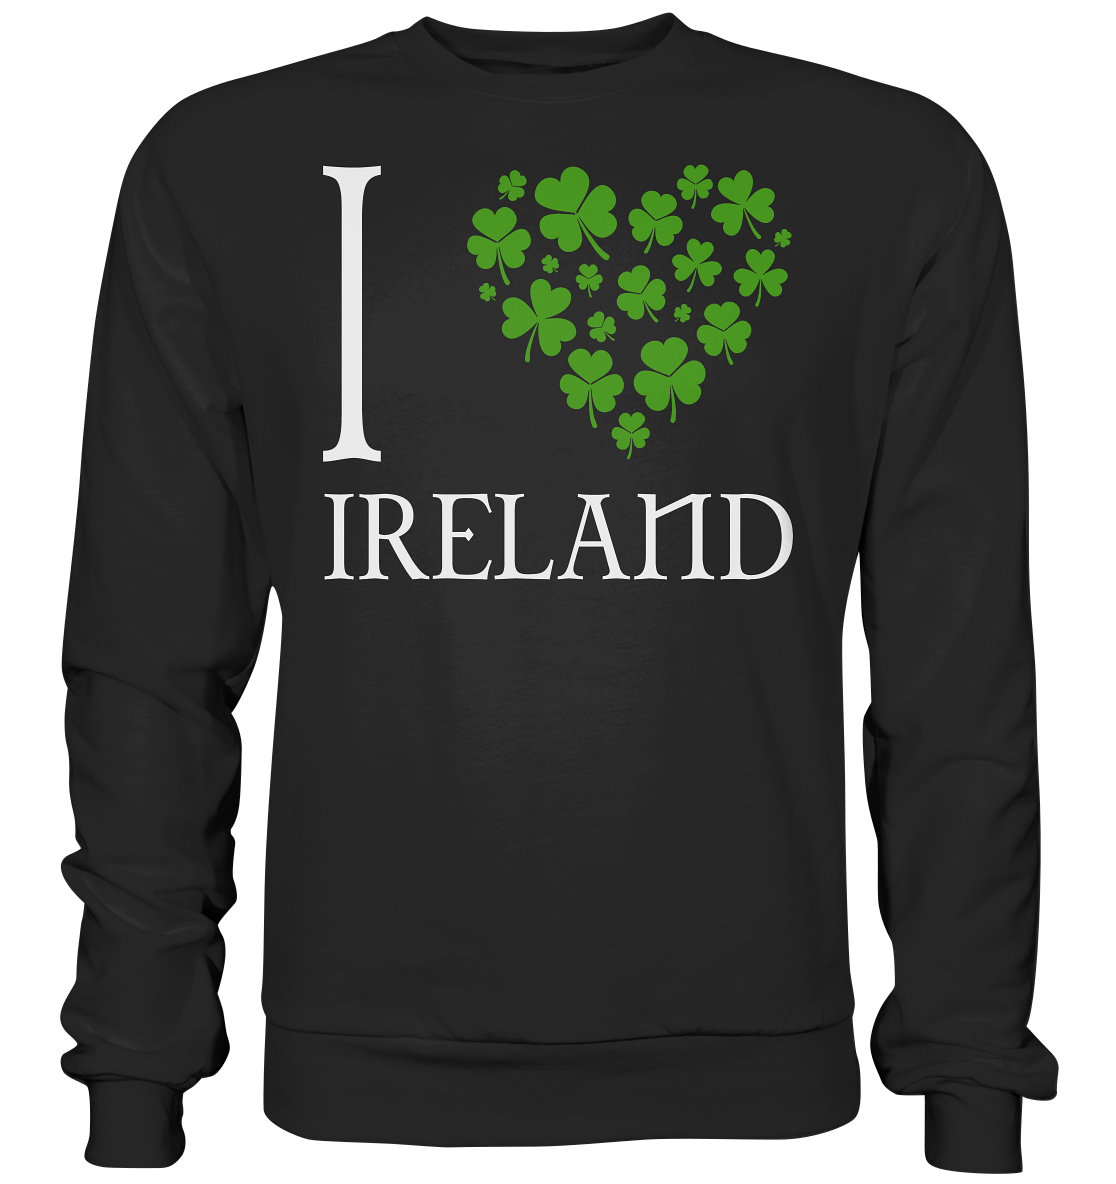 I Love Ireland - Premium Sweatshirt